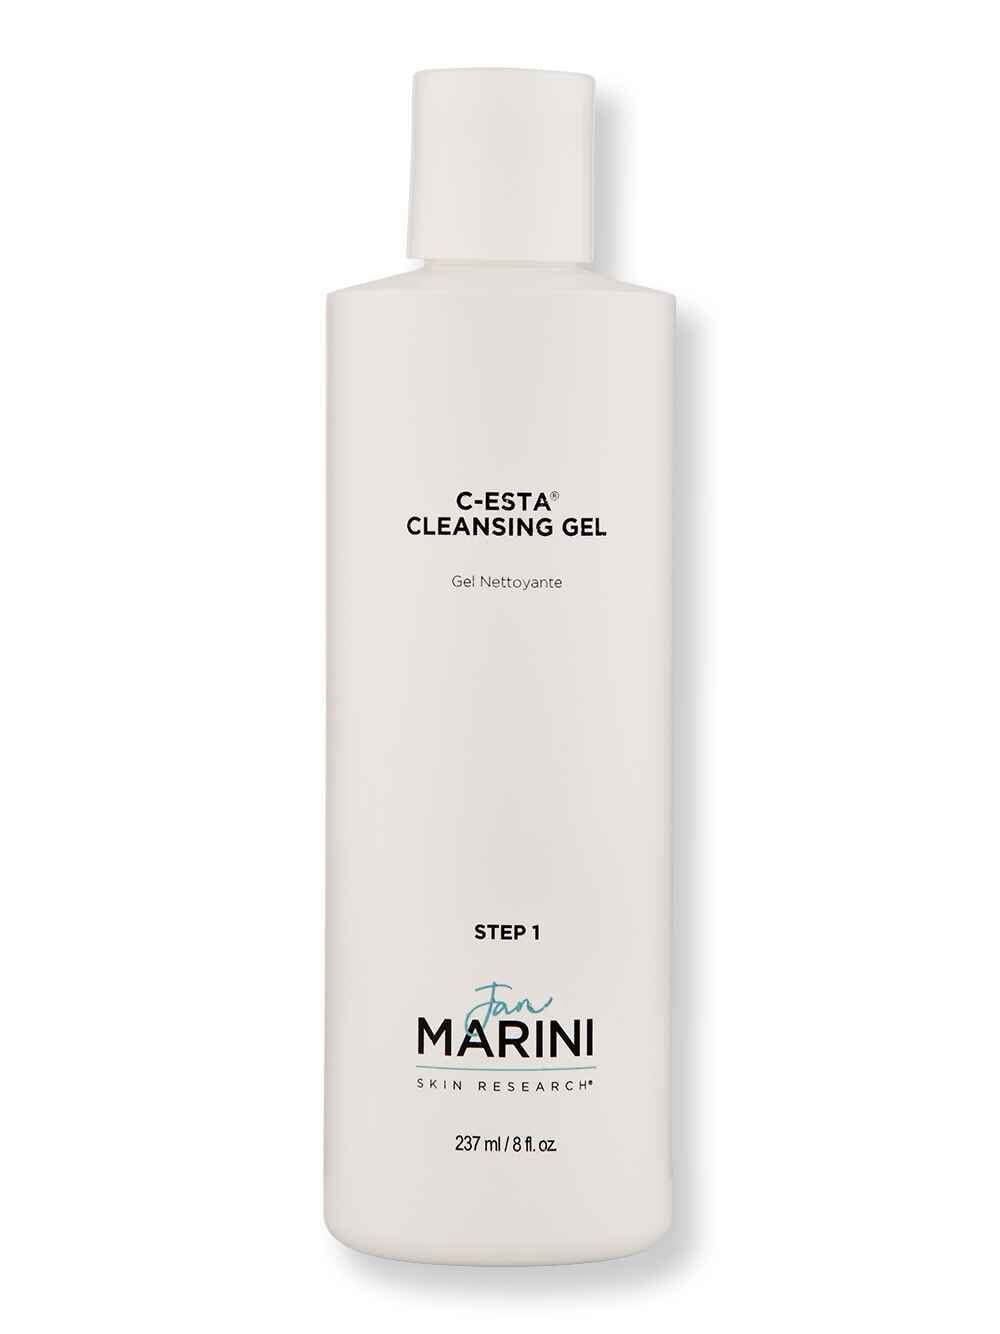 Jan Marini Jan Marini C-Esta Cleansing Gel 8 oz237 ml Face Cleansers 